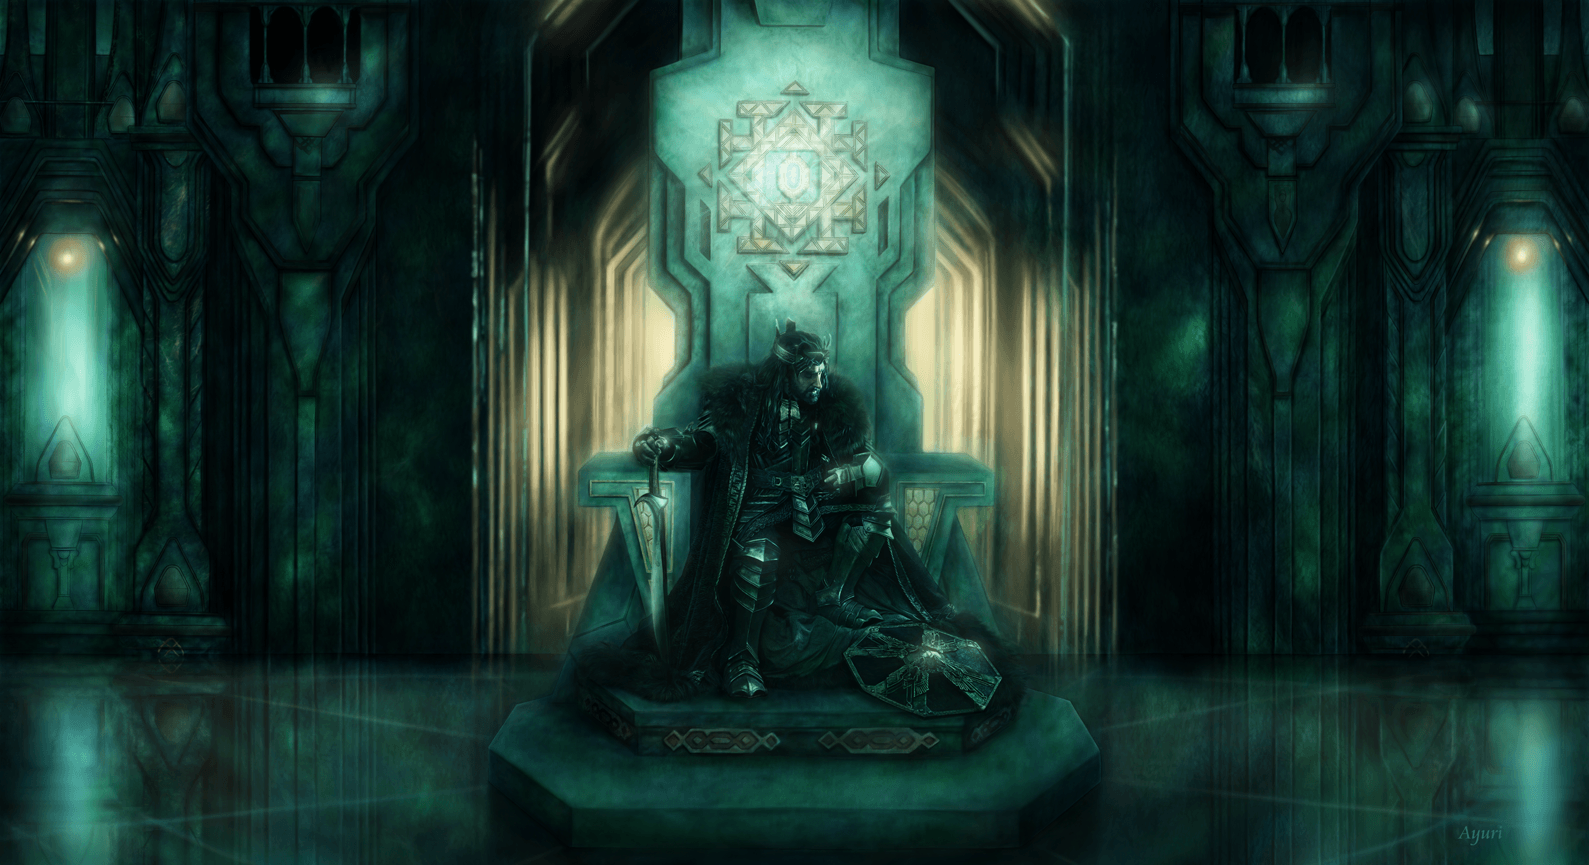 The King Of Erebor By AYURI 327. Hobbit Design